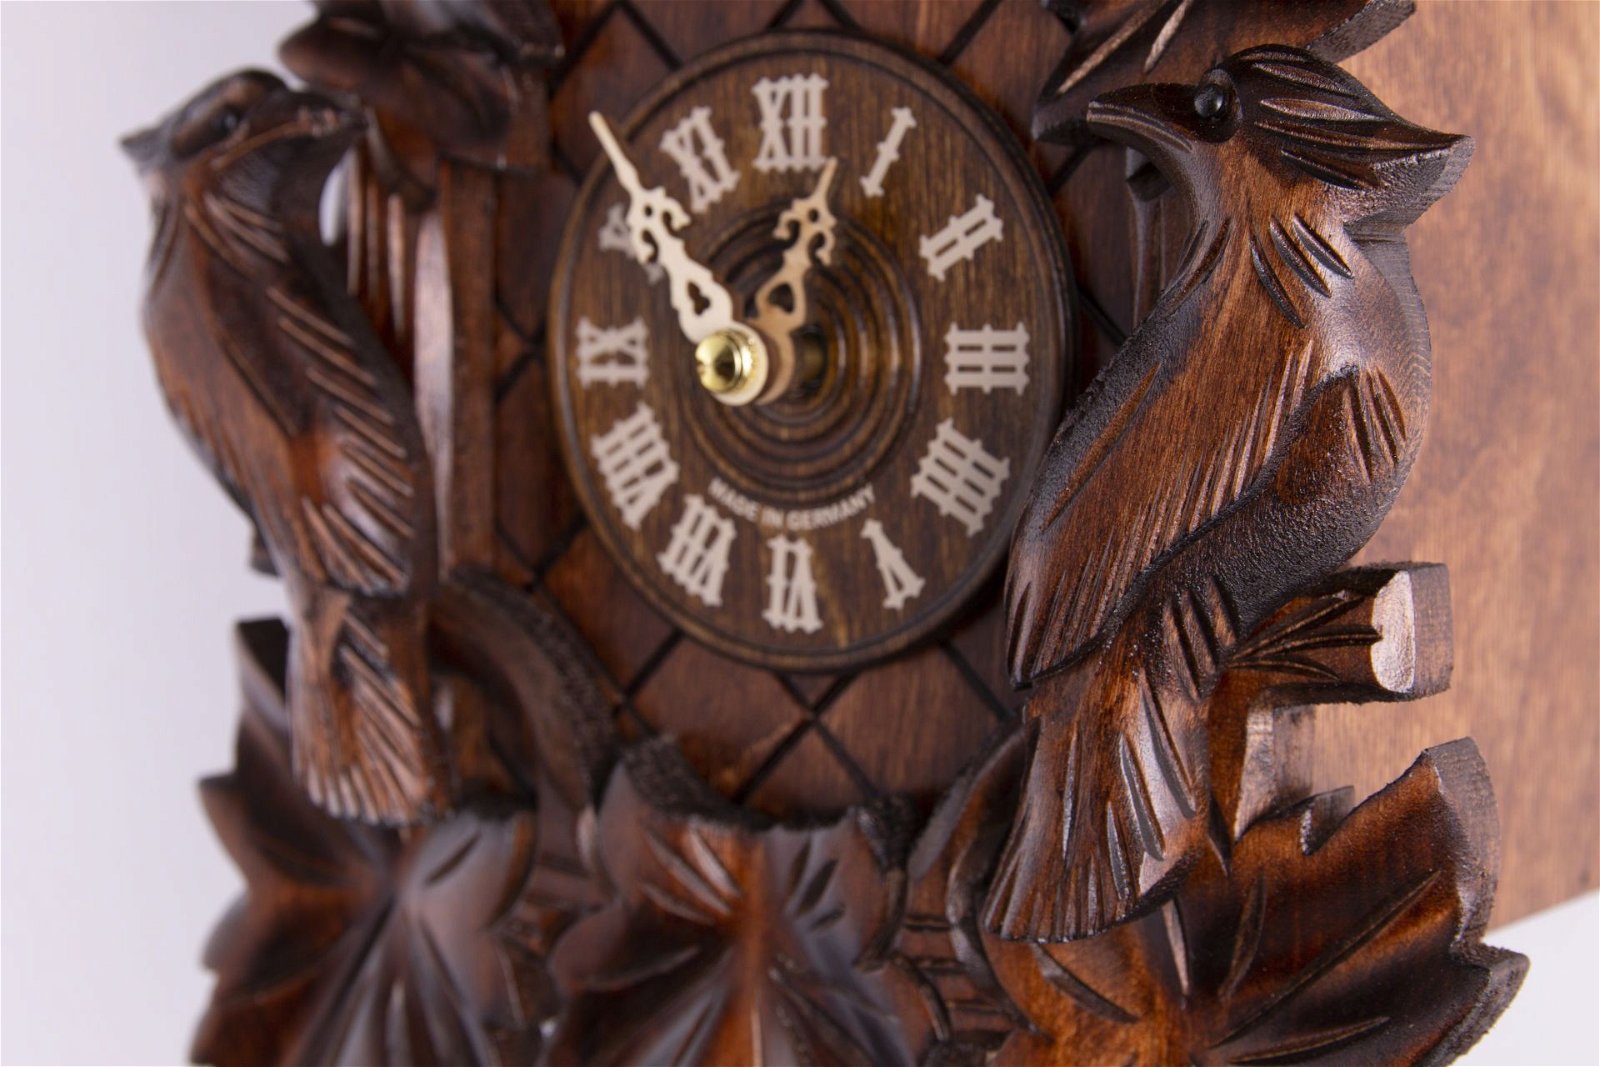 Cuckoo Clock Carved Style Quartz Movement 36cm by Trenkle Uhren